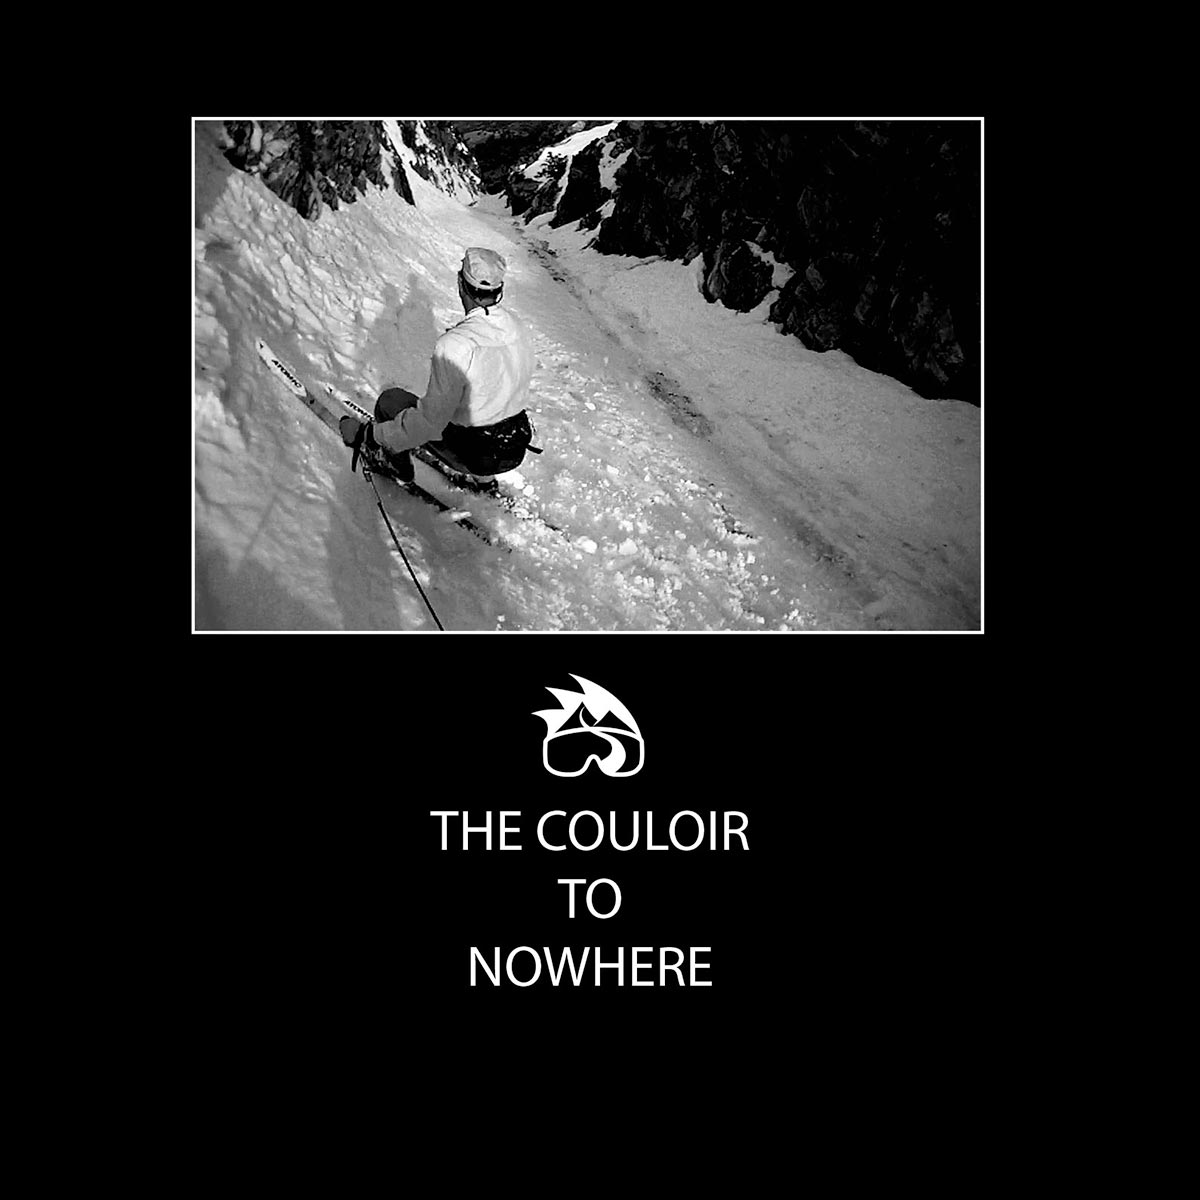 Dave Braun Skiing Iron Mountain's North Couloir